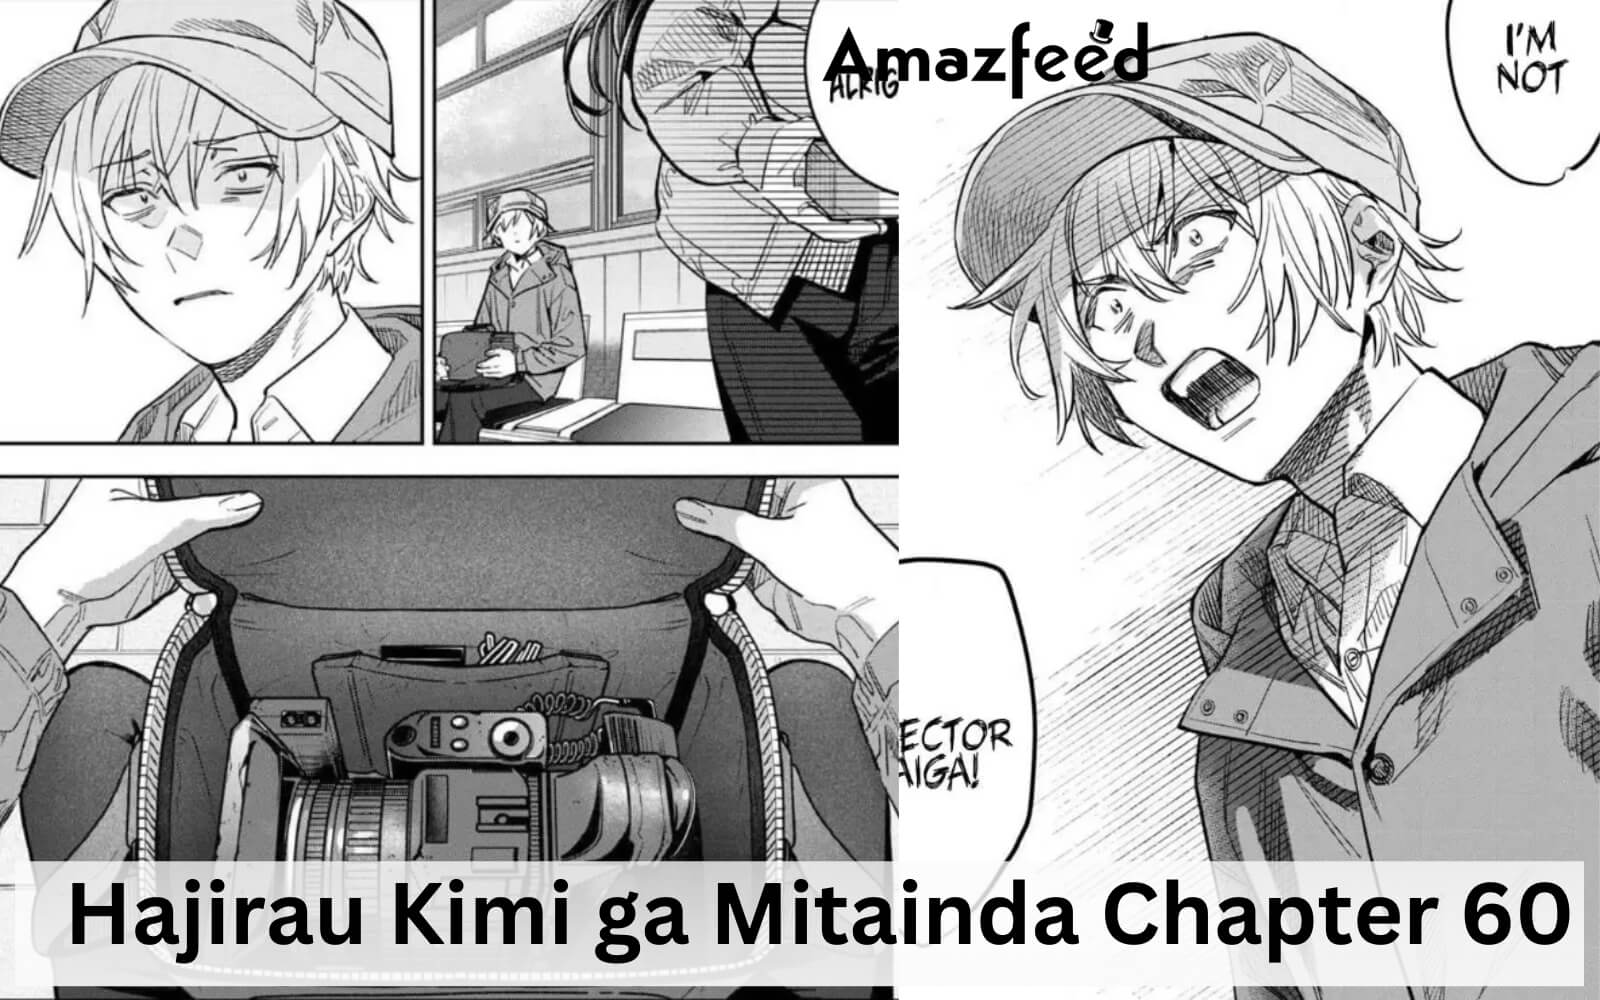 Chainsaw Man capítulo 151: data e hora de lançamento - Multiverso Anime